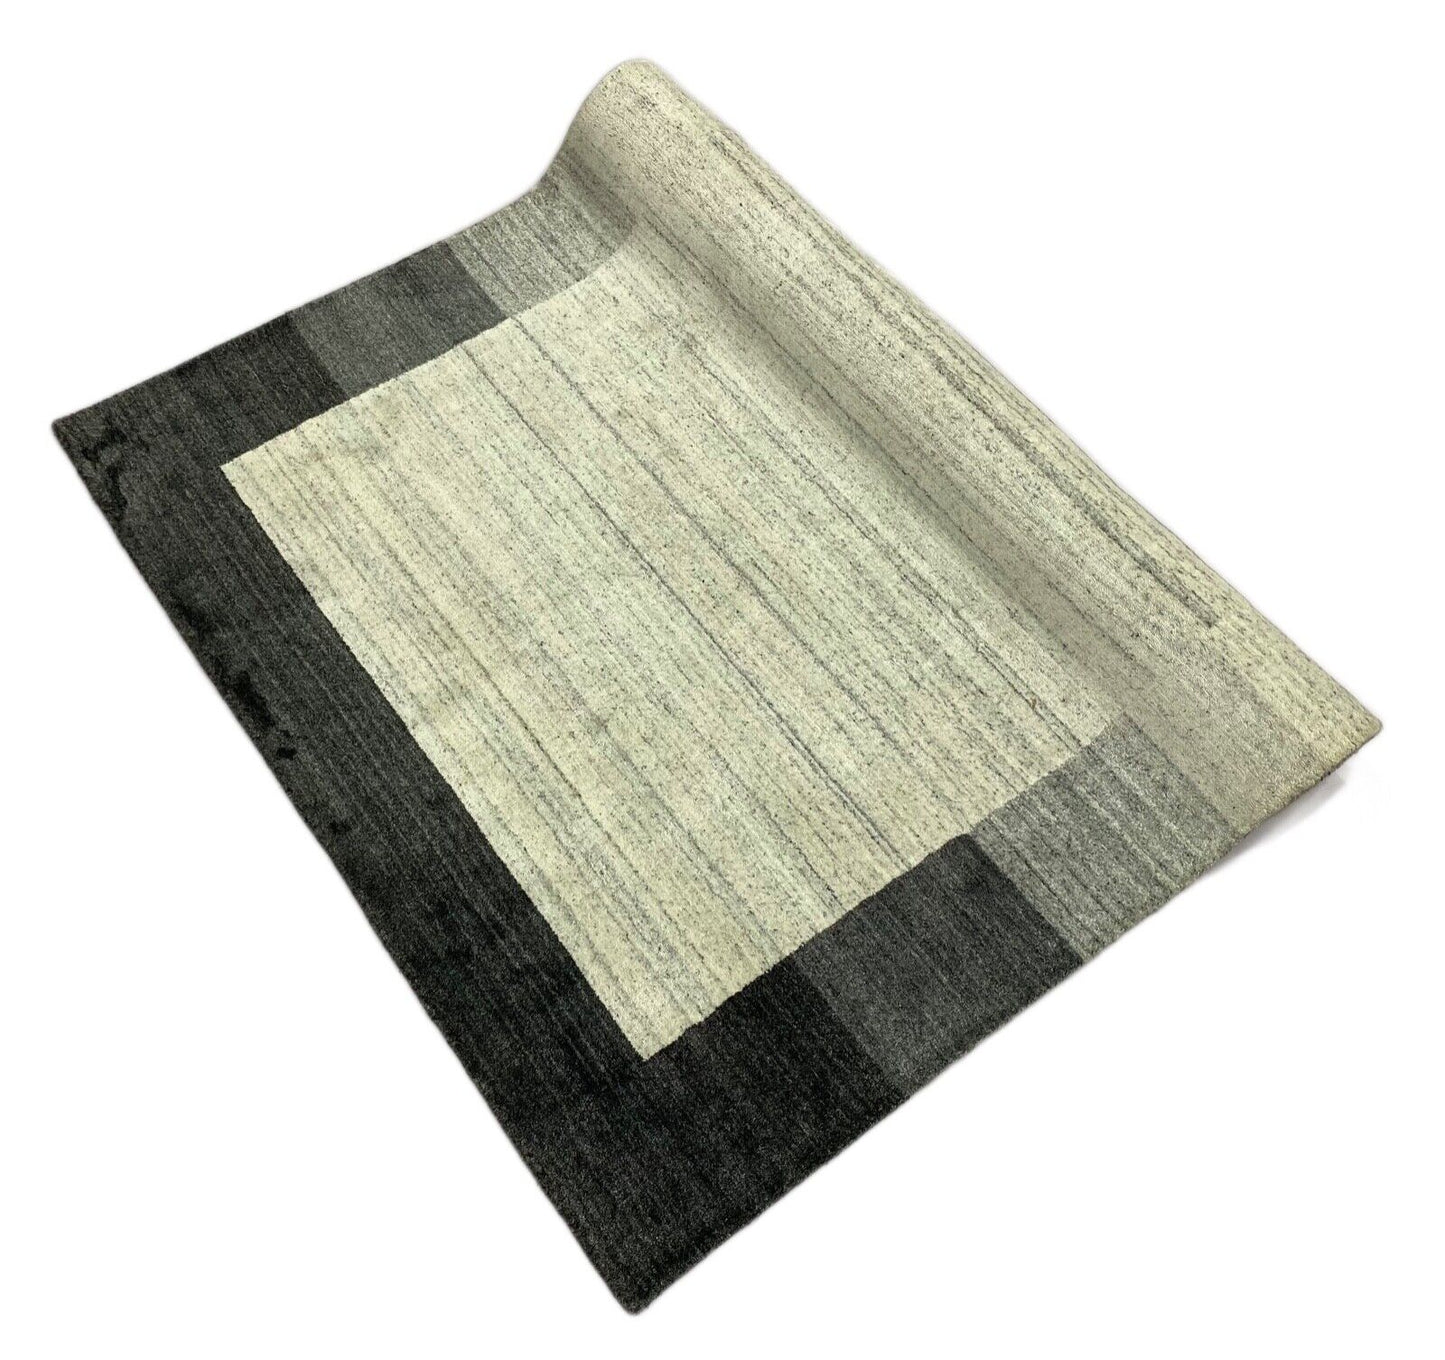 Teppich 100% Wolle Grau Beige Gabbeh lori Handgewebt 120x180 cm dp Garn S21